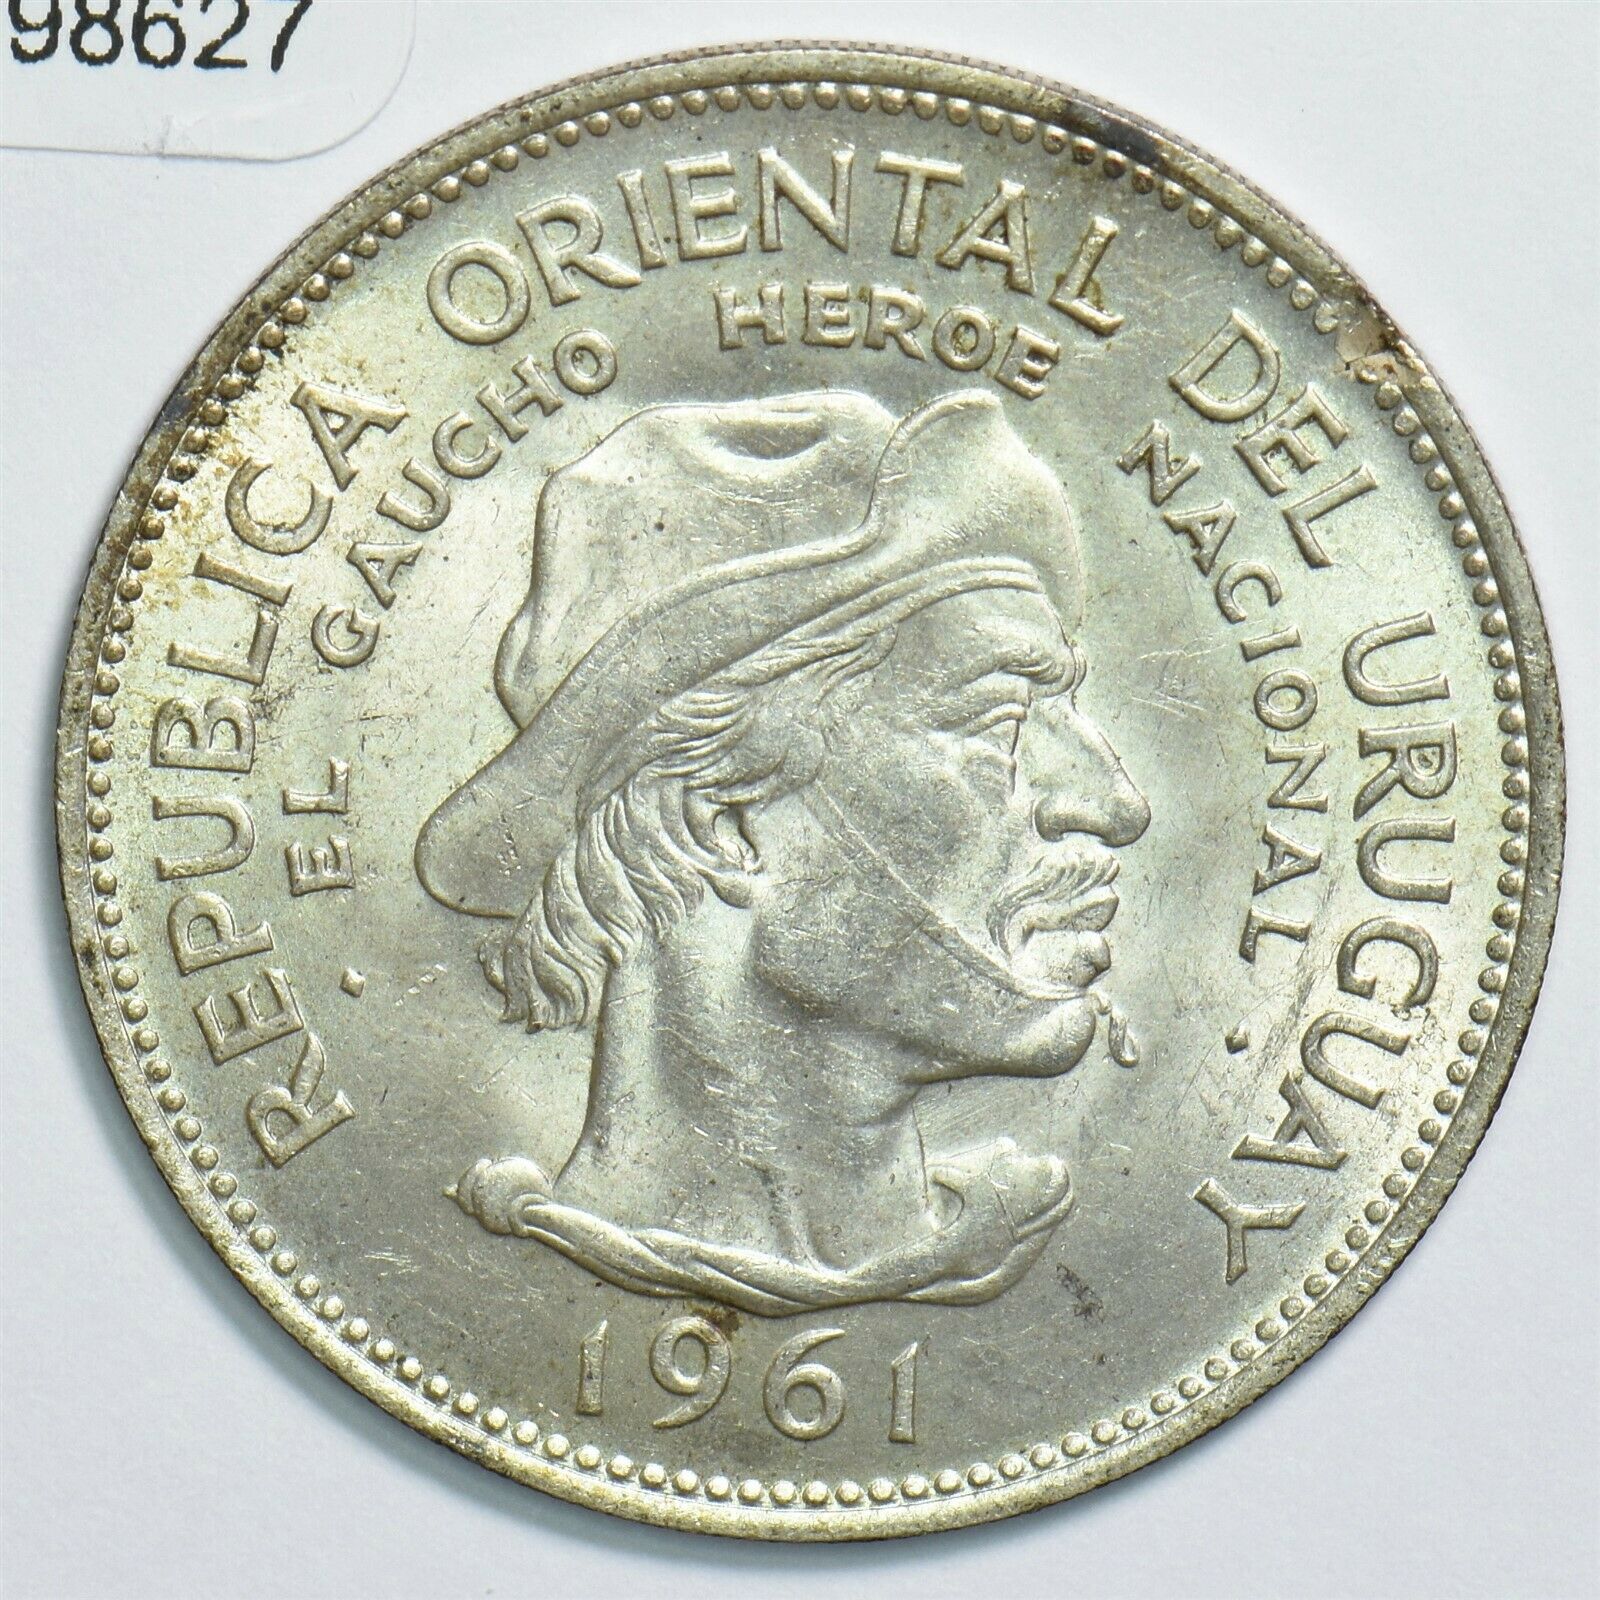 Uruguay 1961 10 Pesos 298627 Combine Shipping